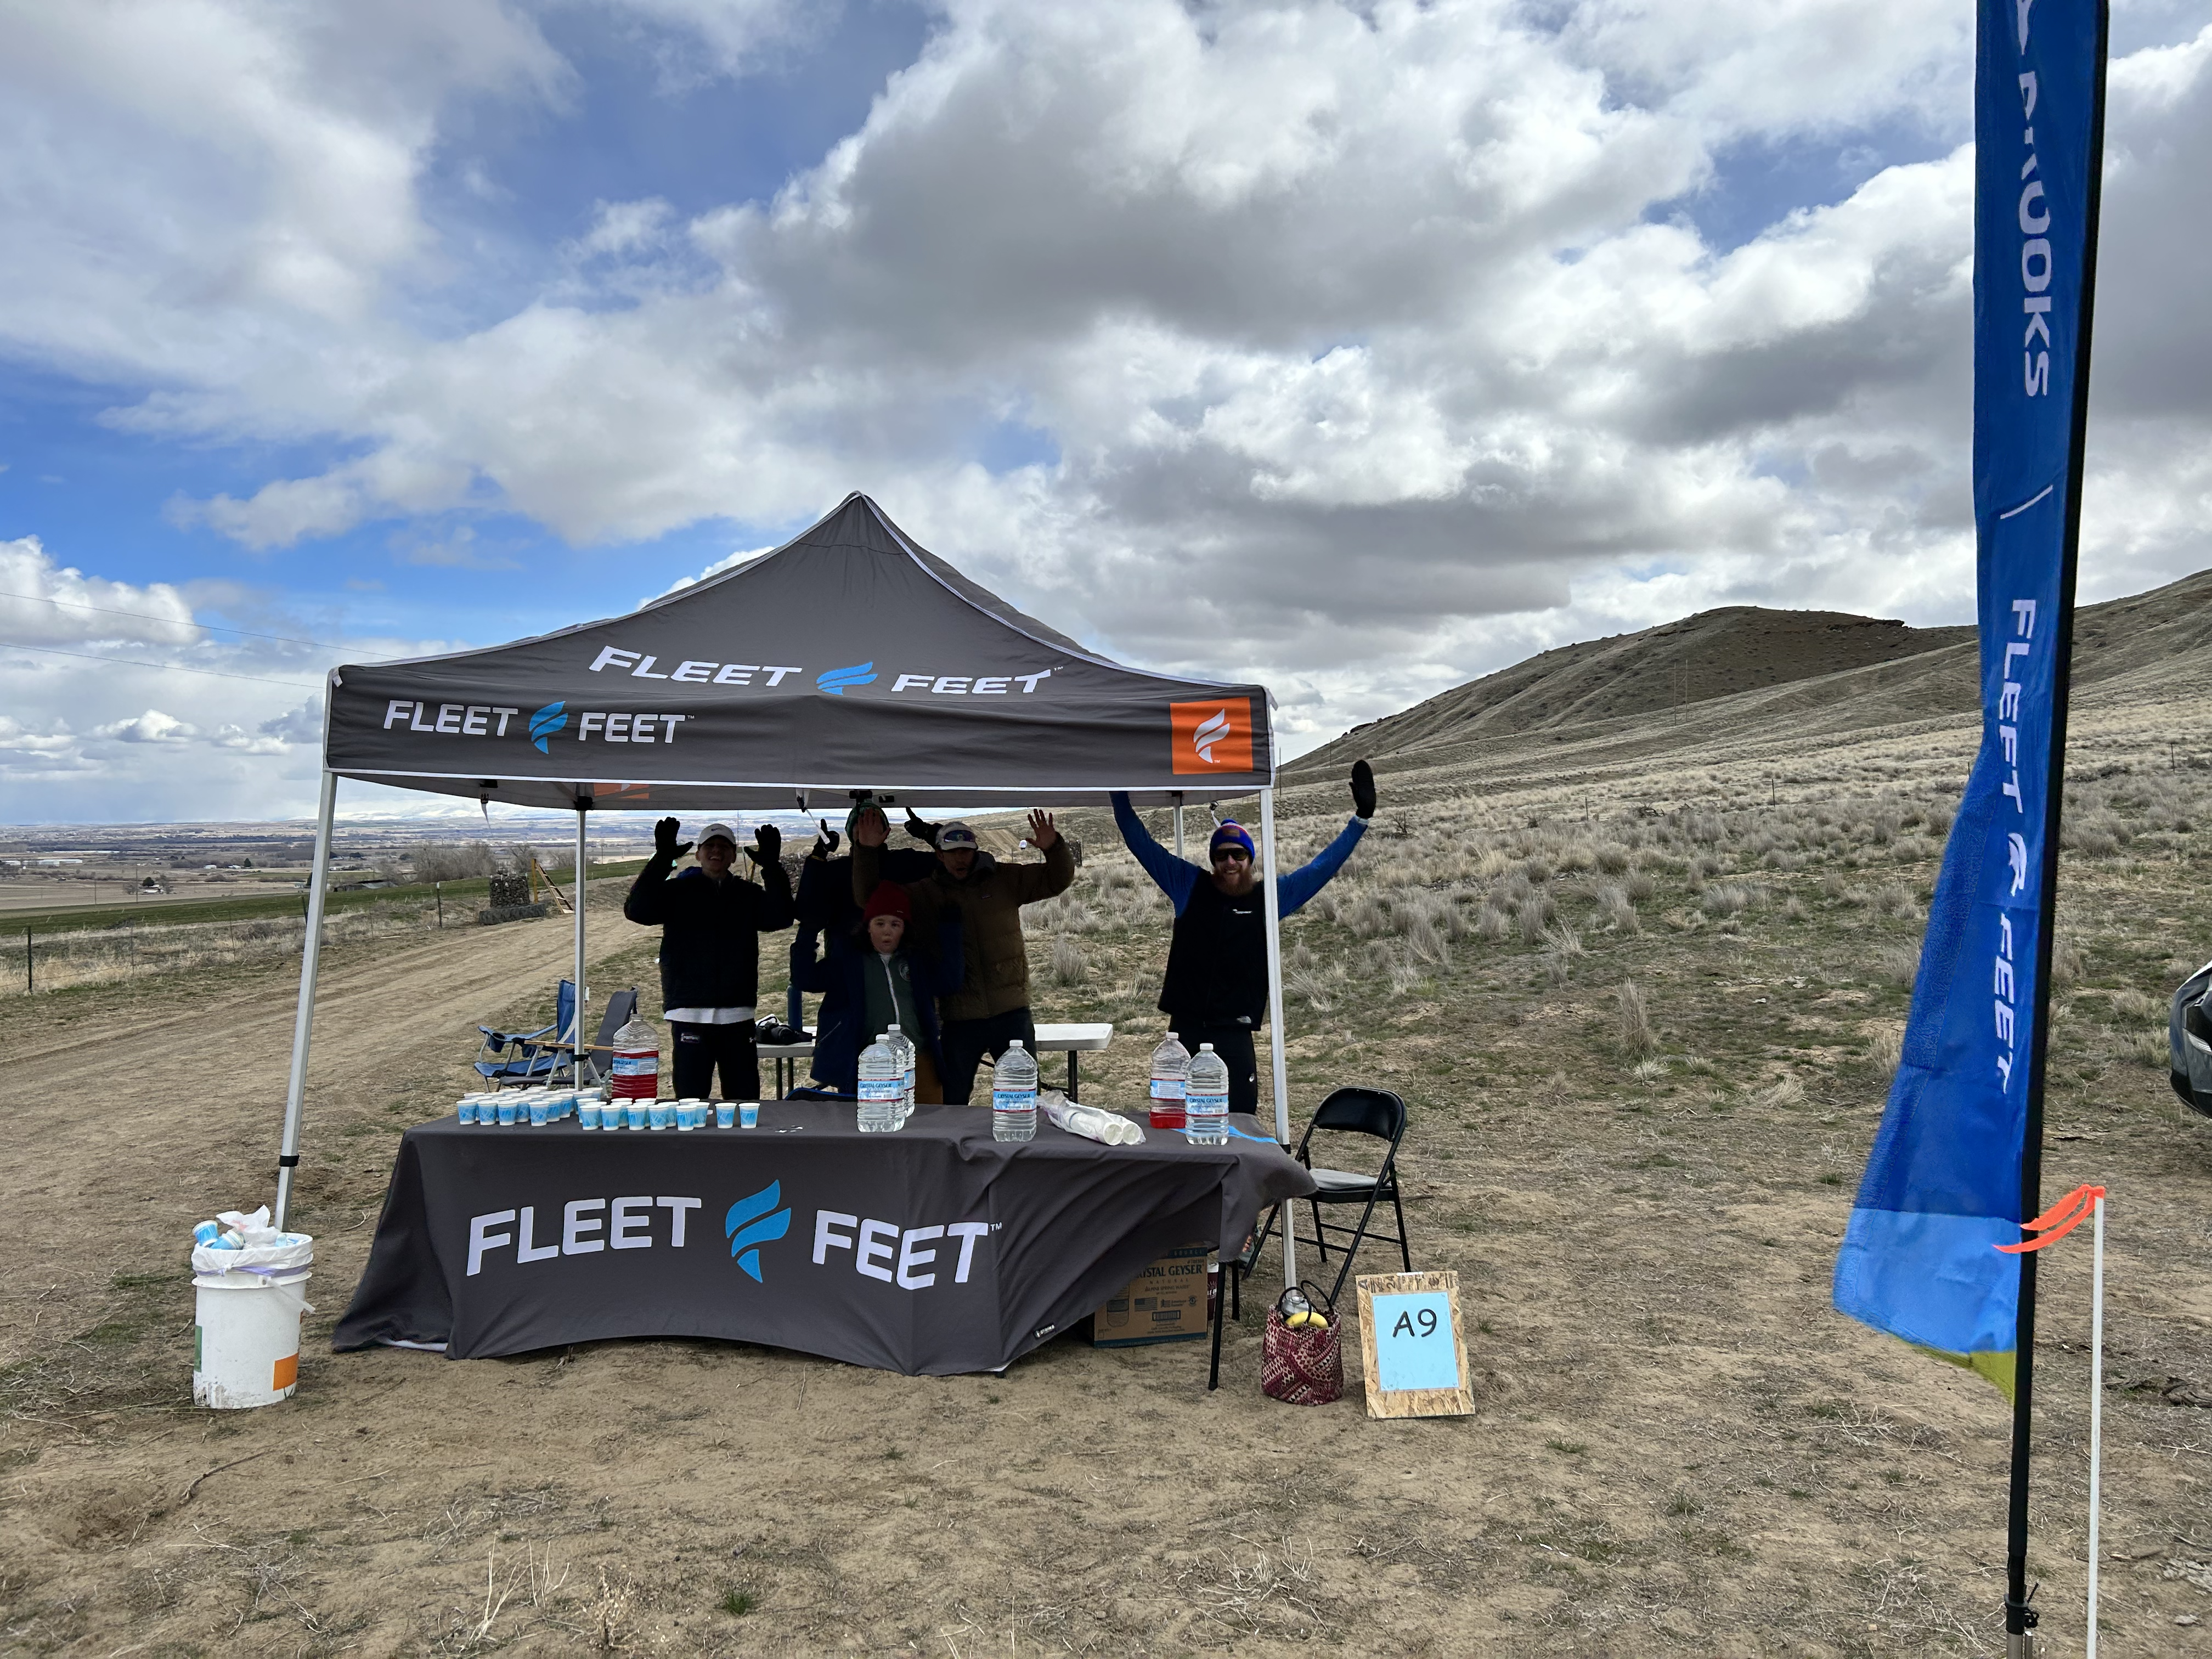 Fleet Feet Meridian sponsored aid station 9 at the Owyhee Off-Road Challenge!